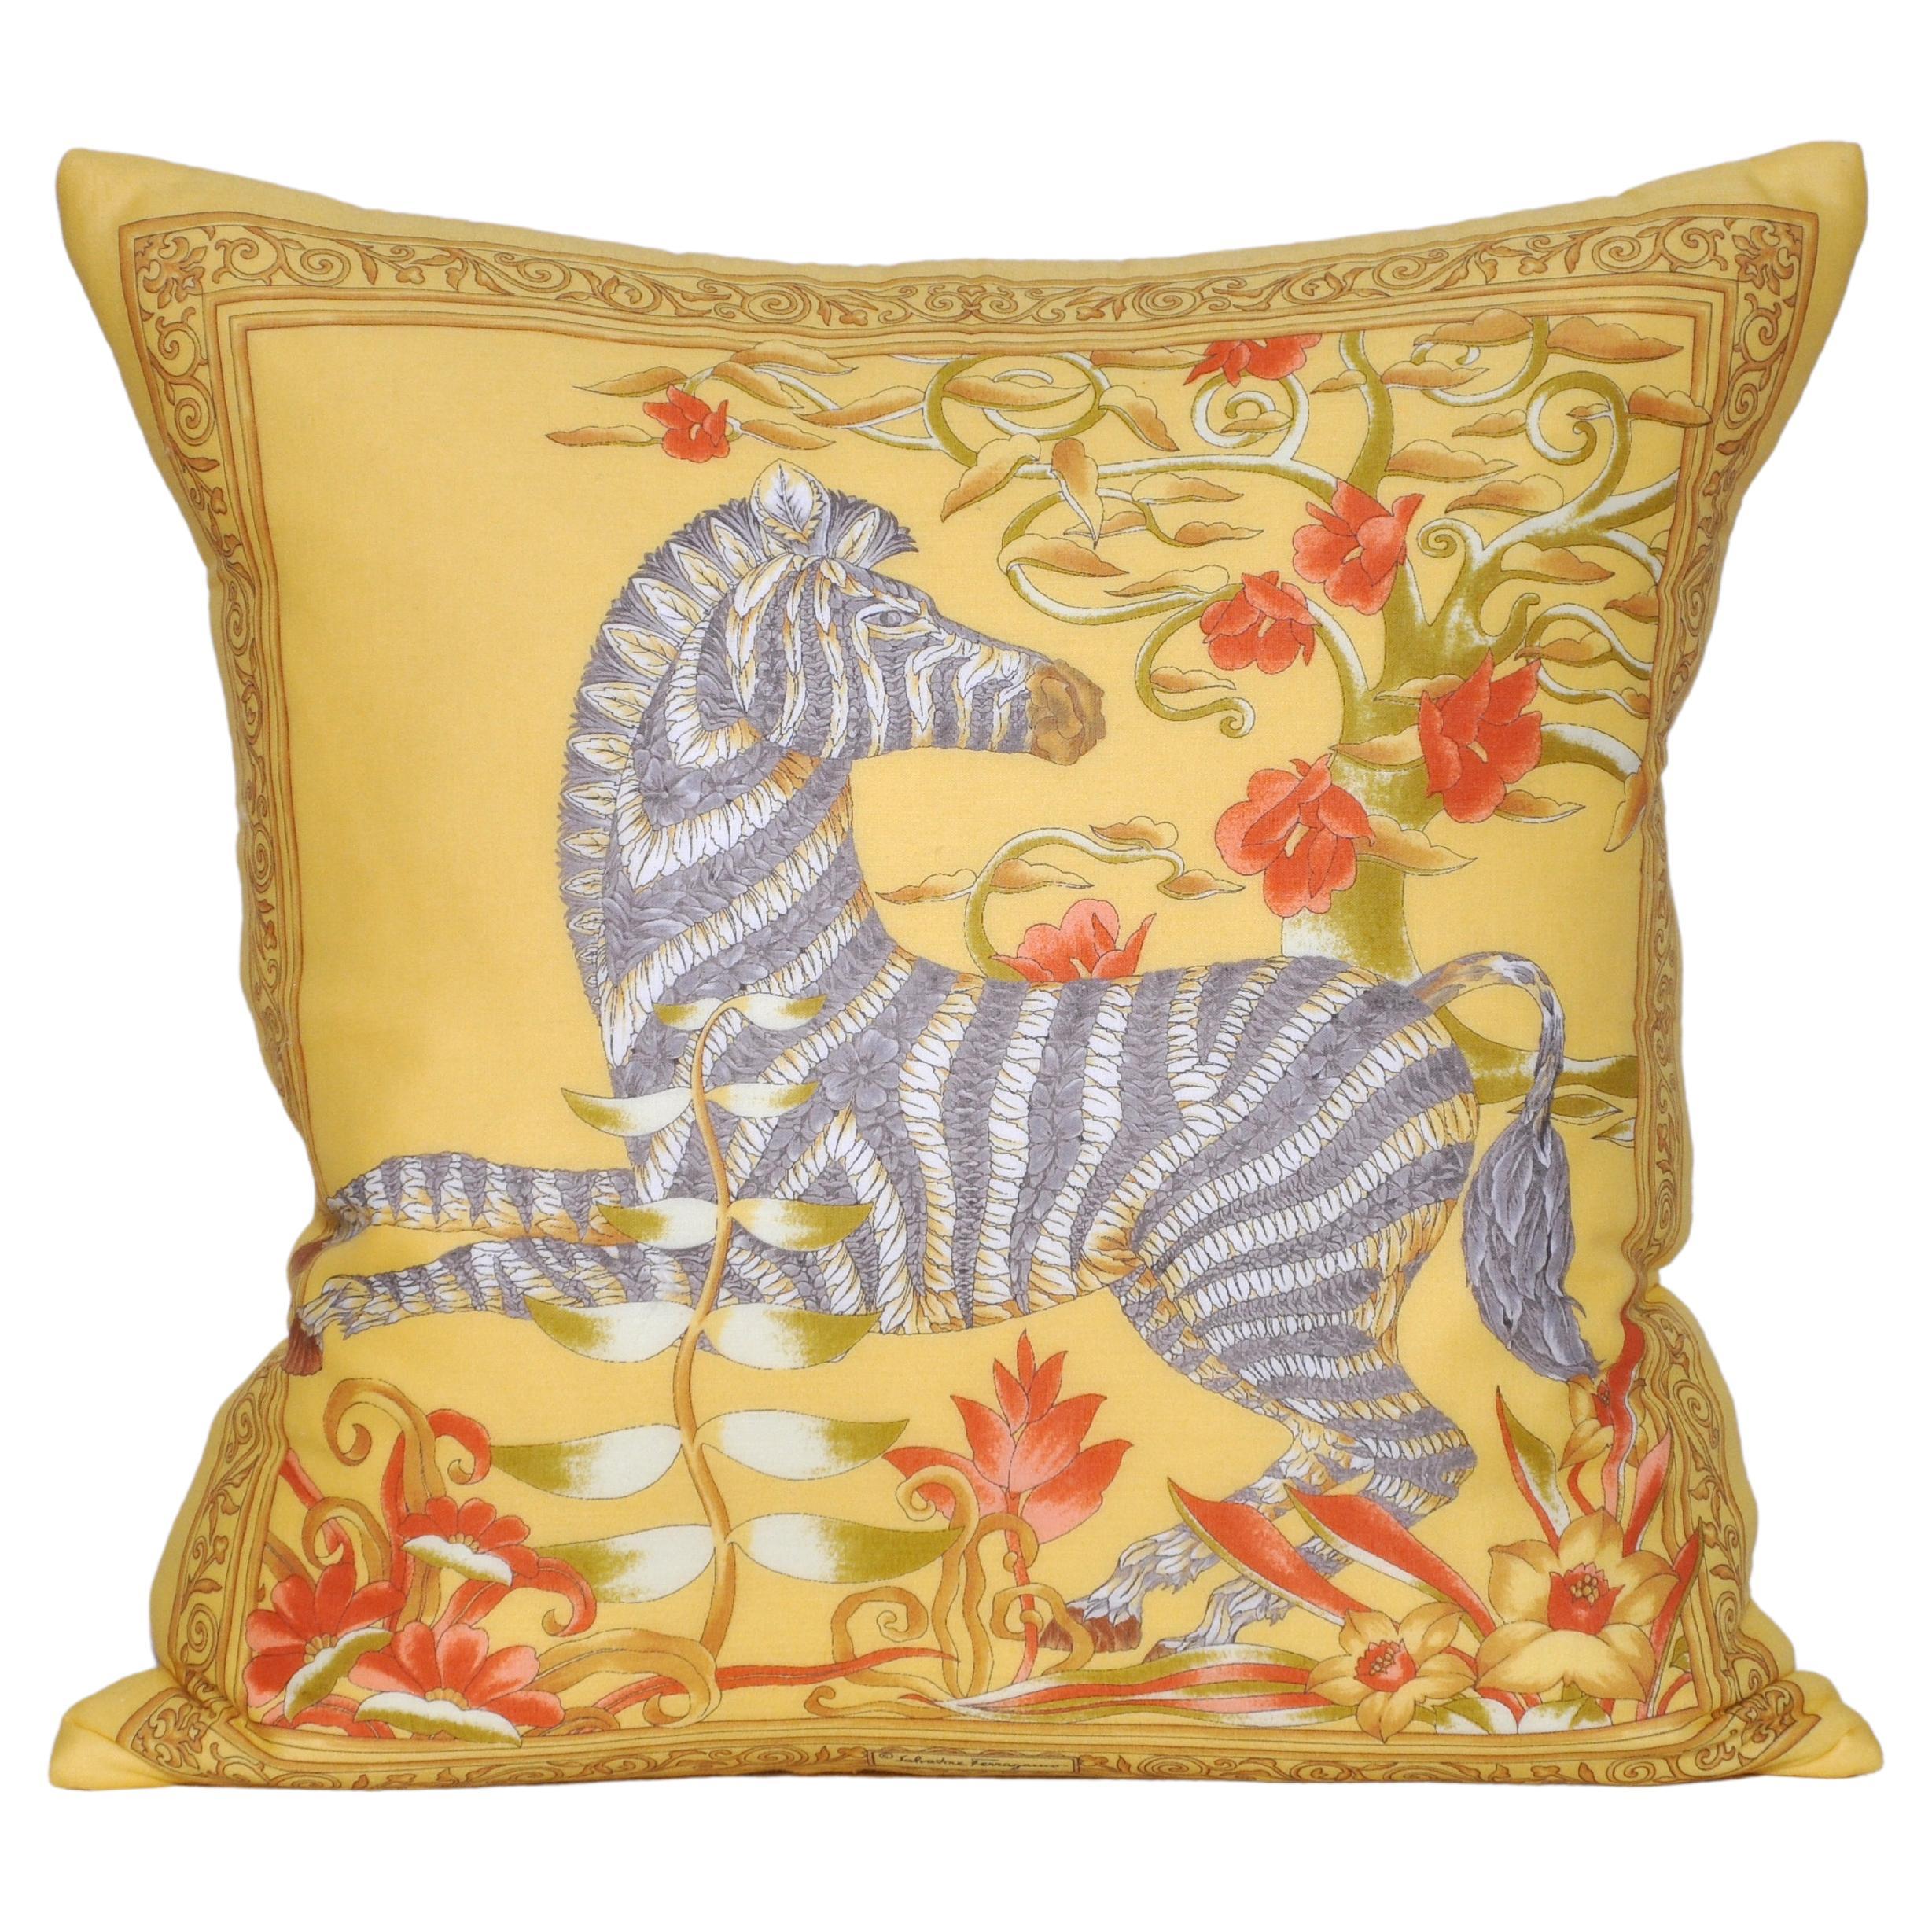 Rare Vintage Salvatore Ferragamo Yellow Gold Scarf Cushion in Linen Pillow